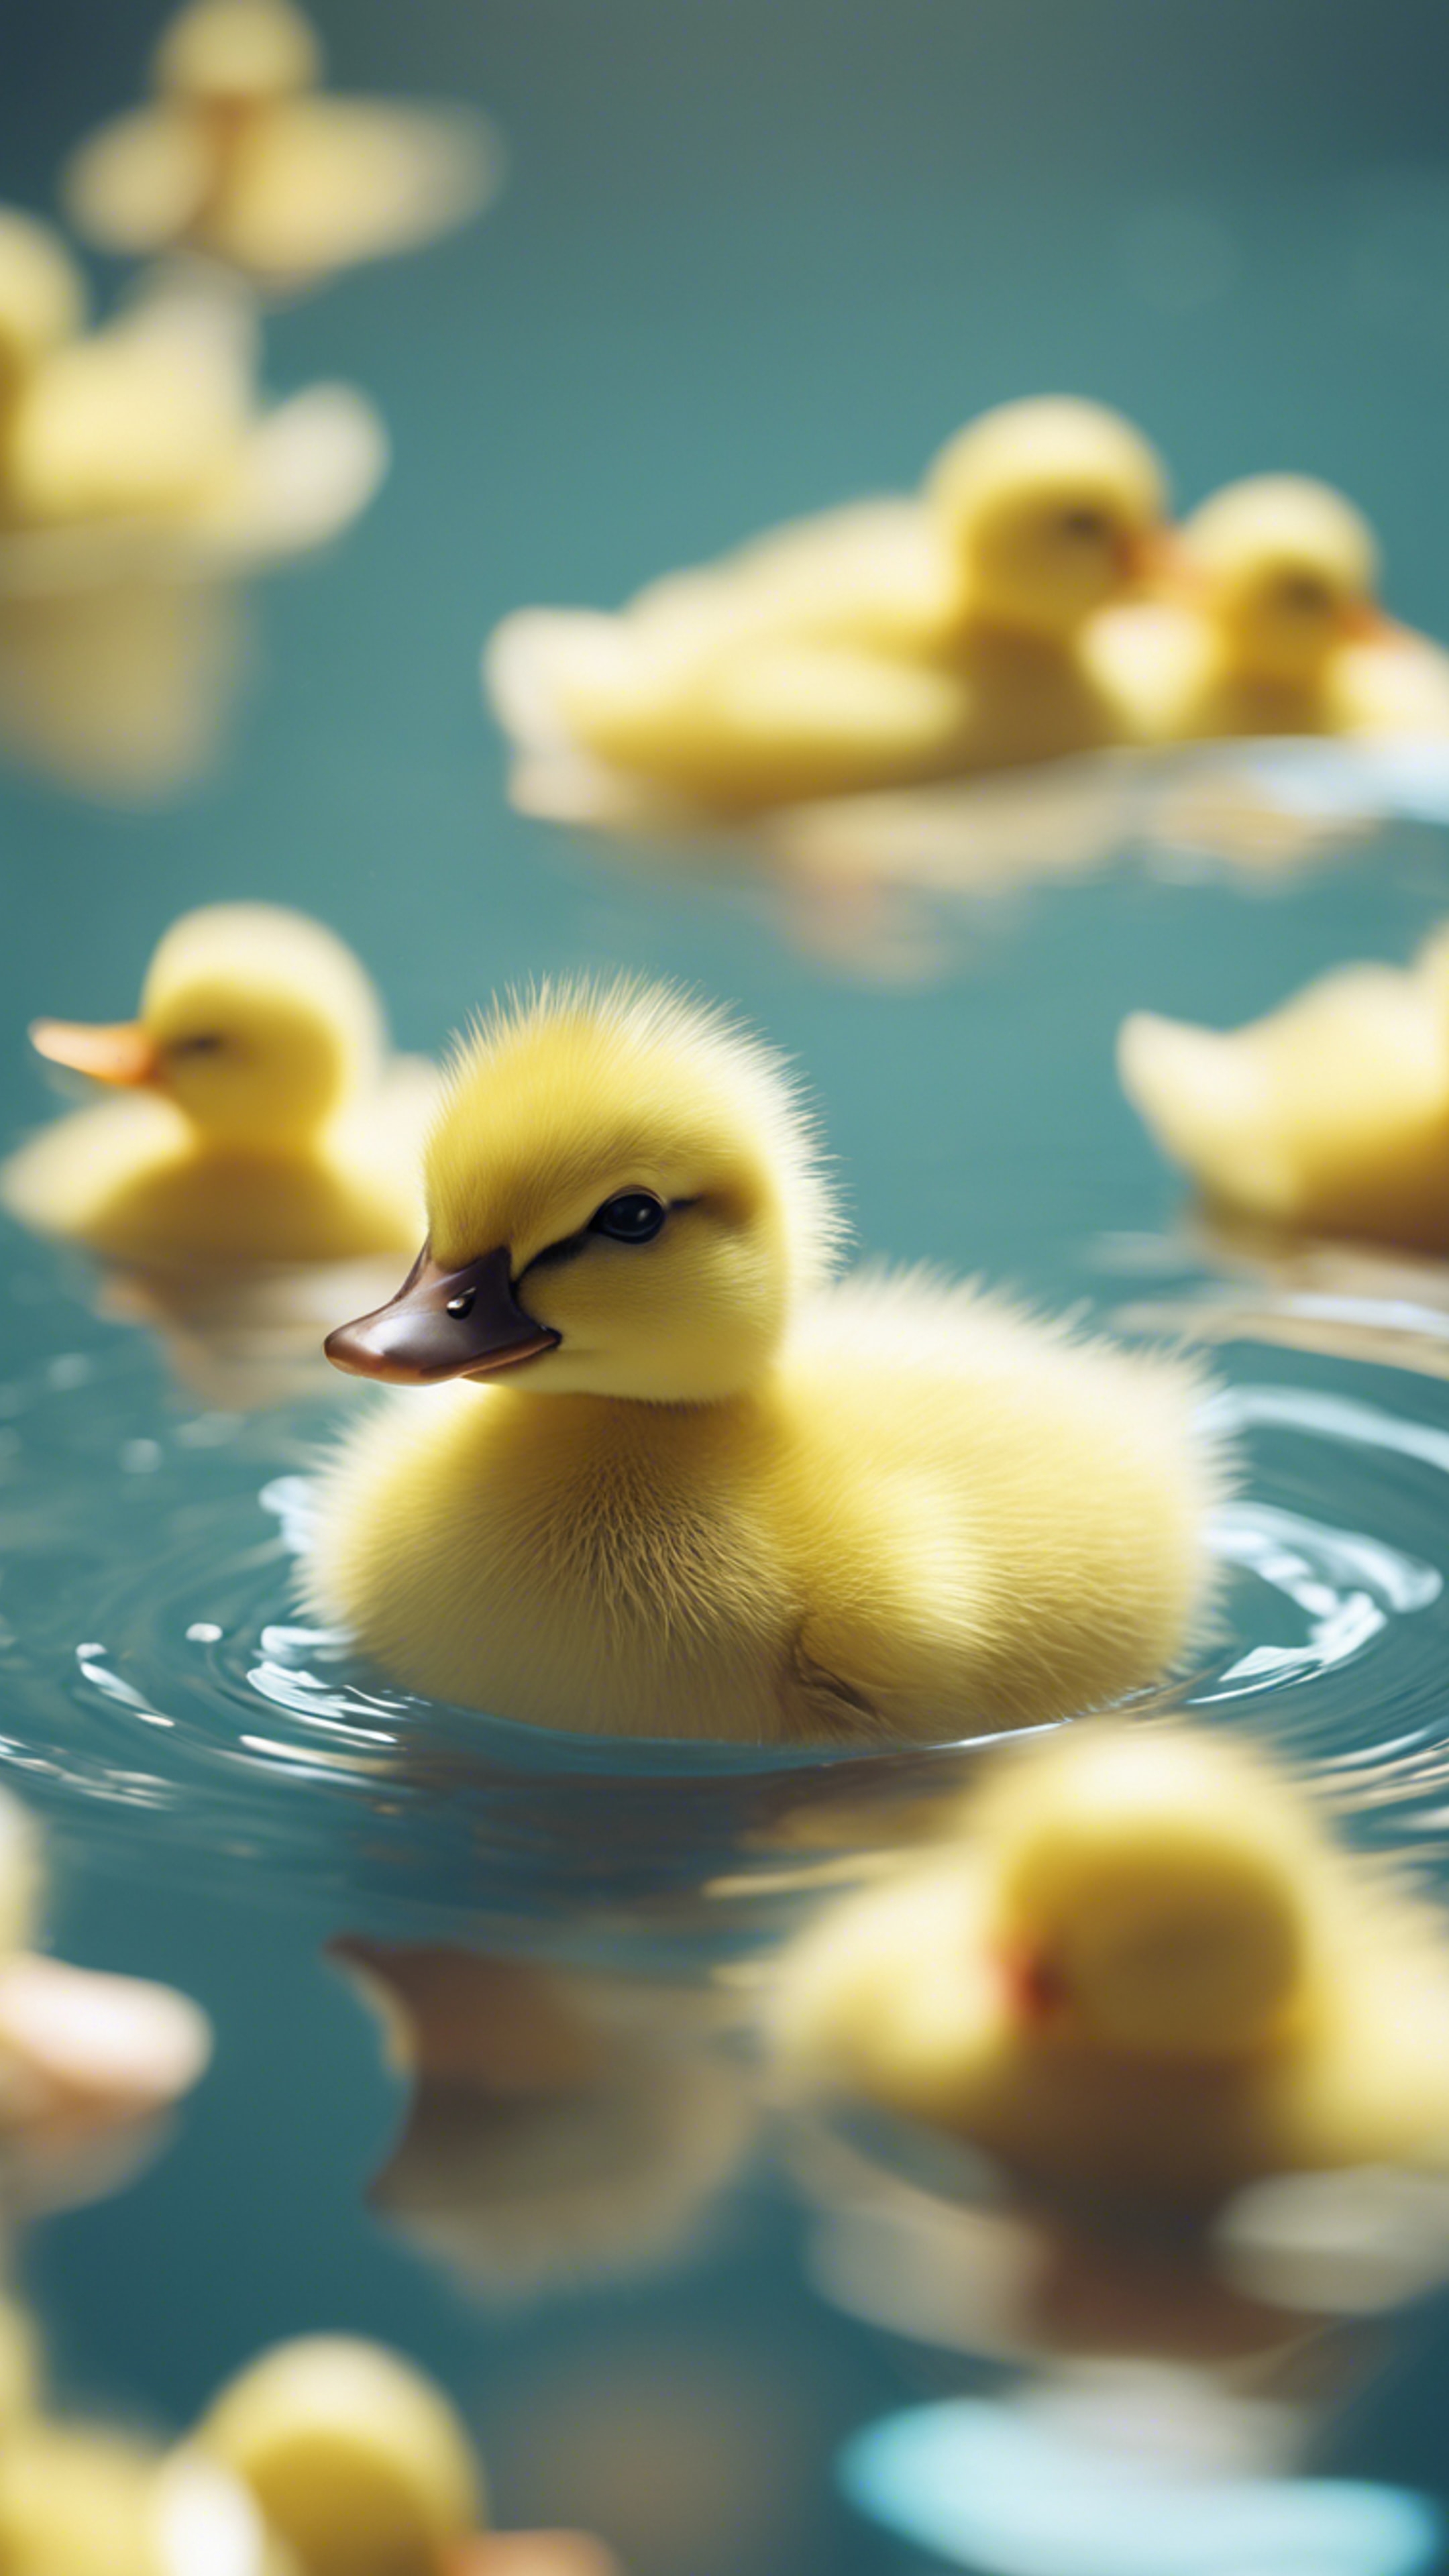 A small, chubby, kawaii yellow duckling swimming in a pastel blue pond. Tapeta[2b07b187d2cc4e759cc9]